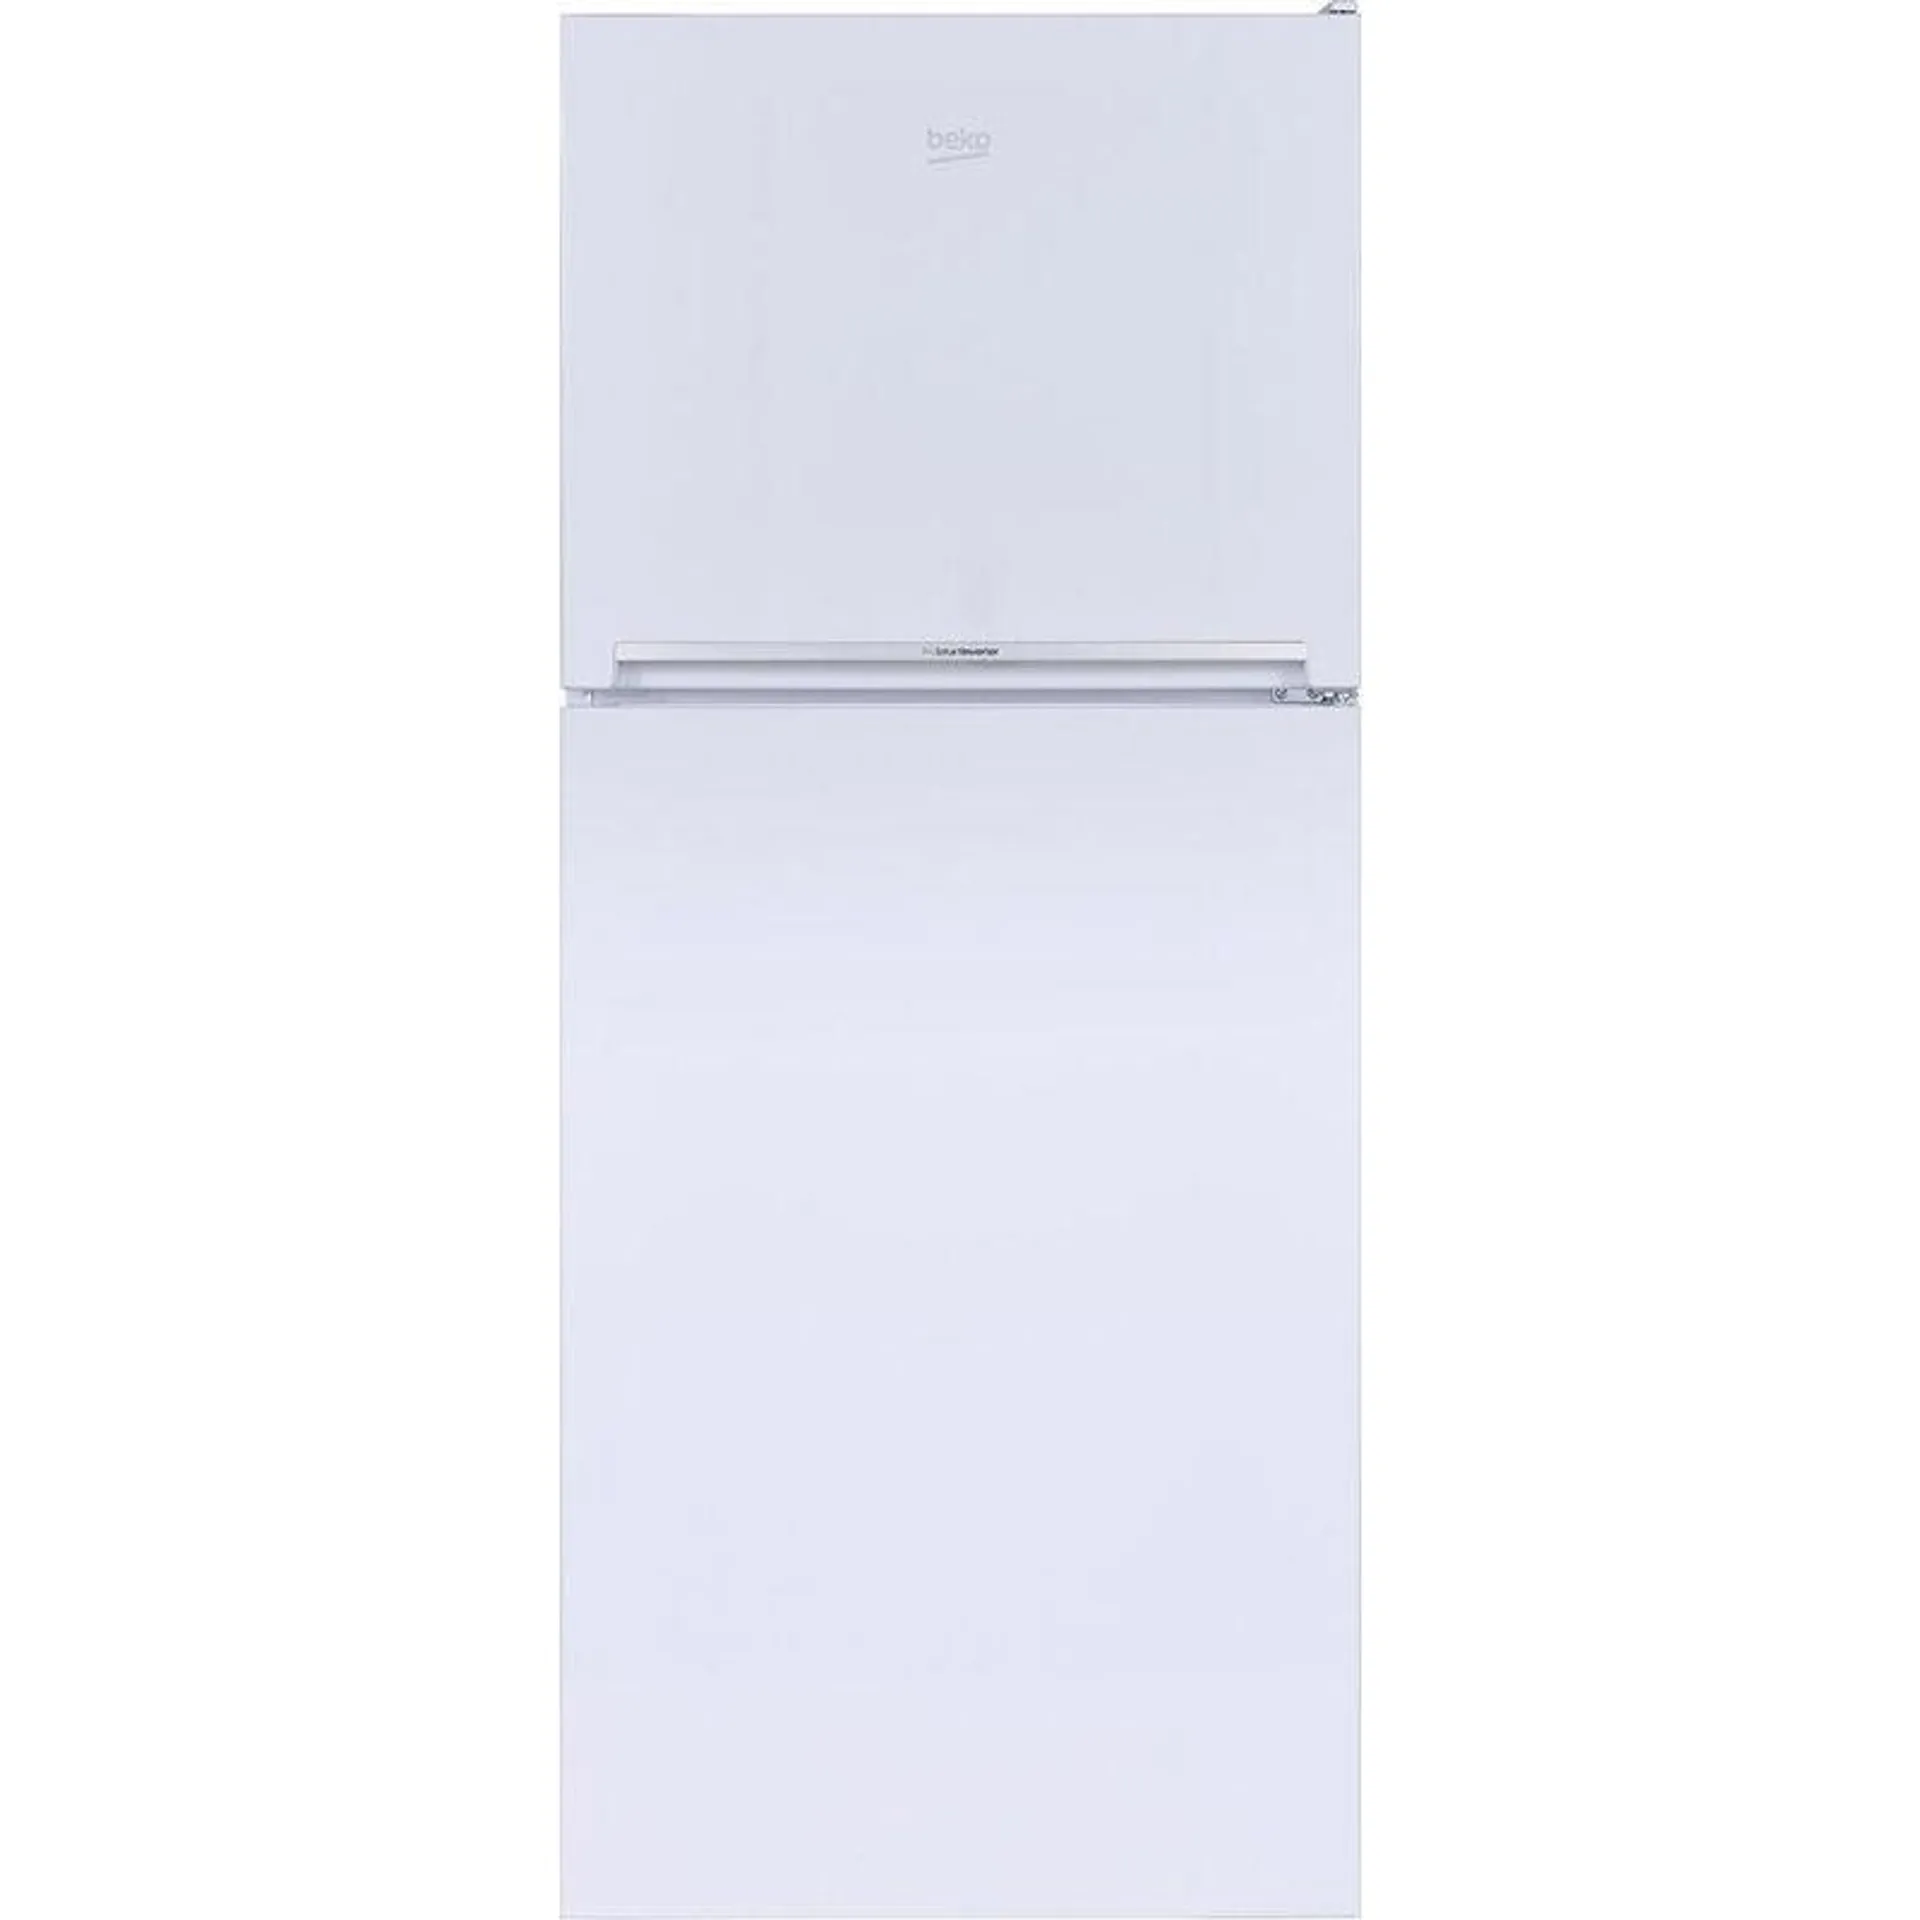 Beko 28 in. 13.5 cu. ft. Counter Depth Top Freezer Refrigerator - White